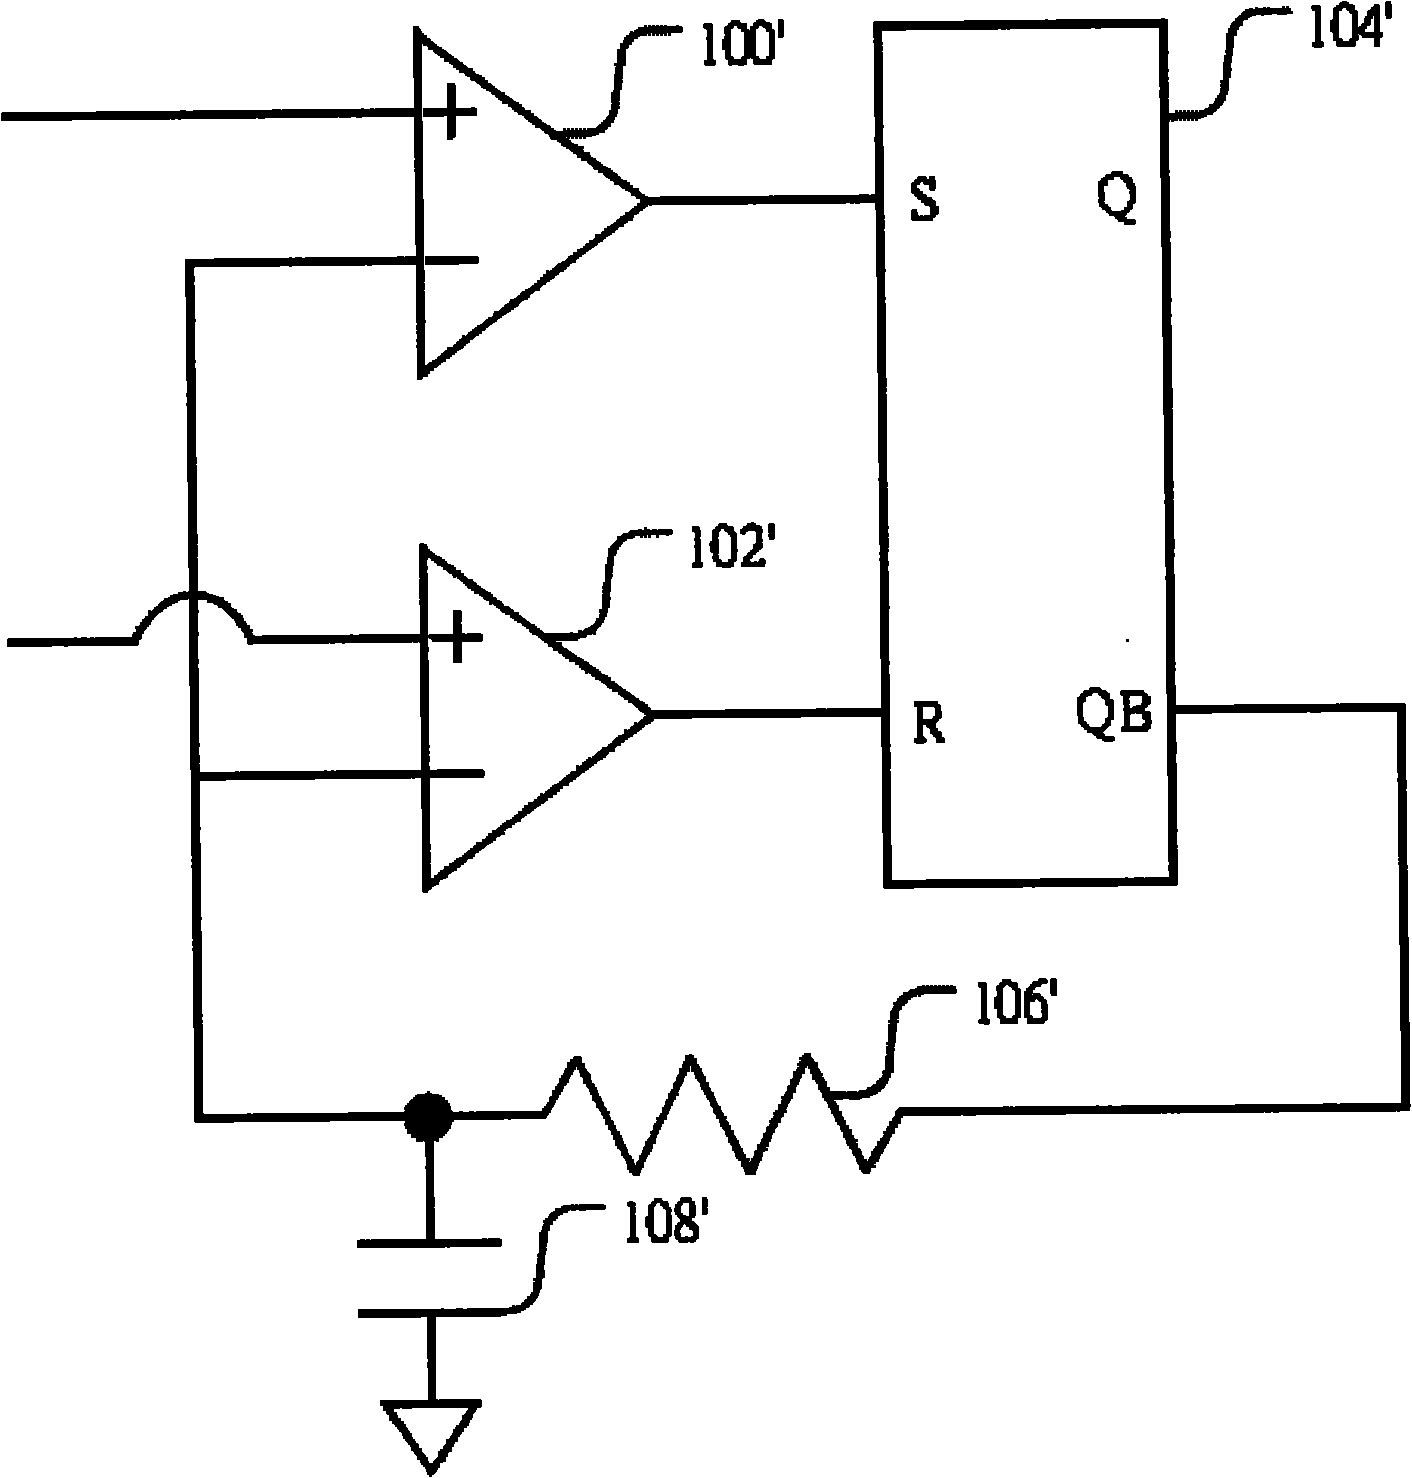 Capacitor sensing circuit having anti-electromagnetic interference capability